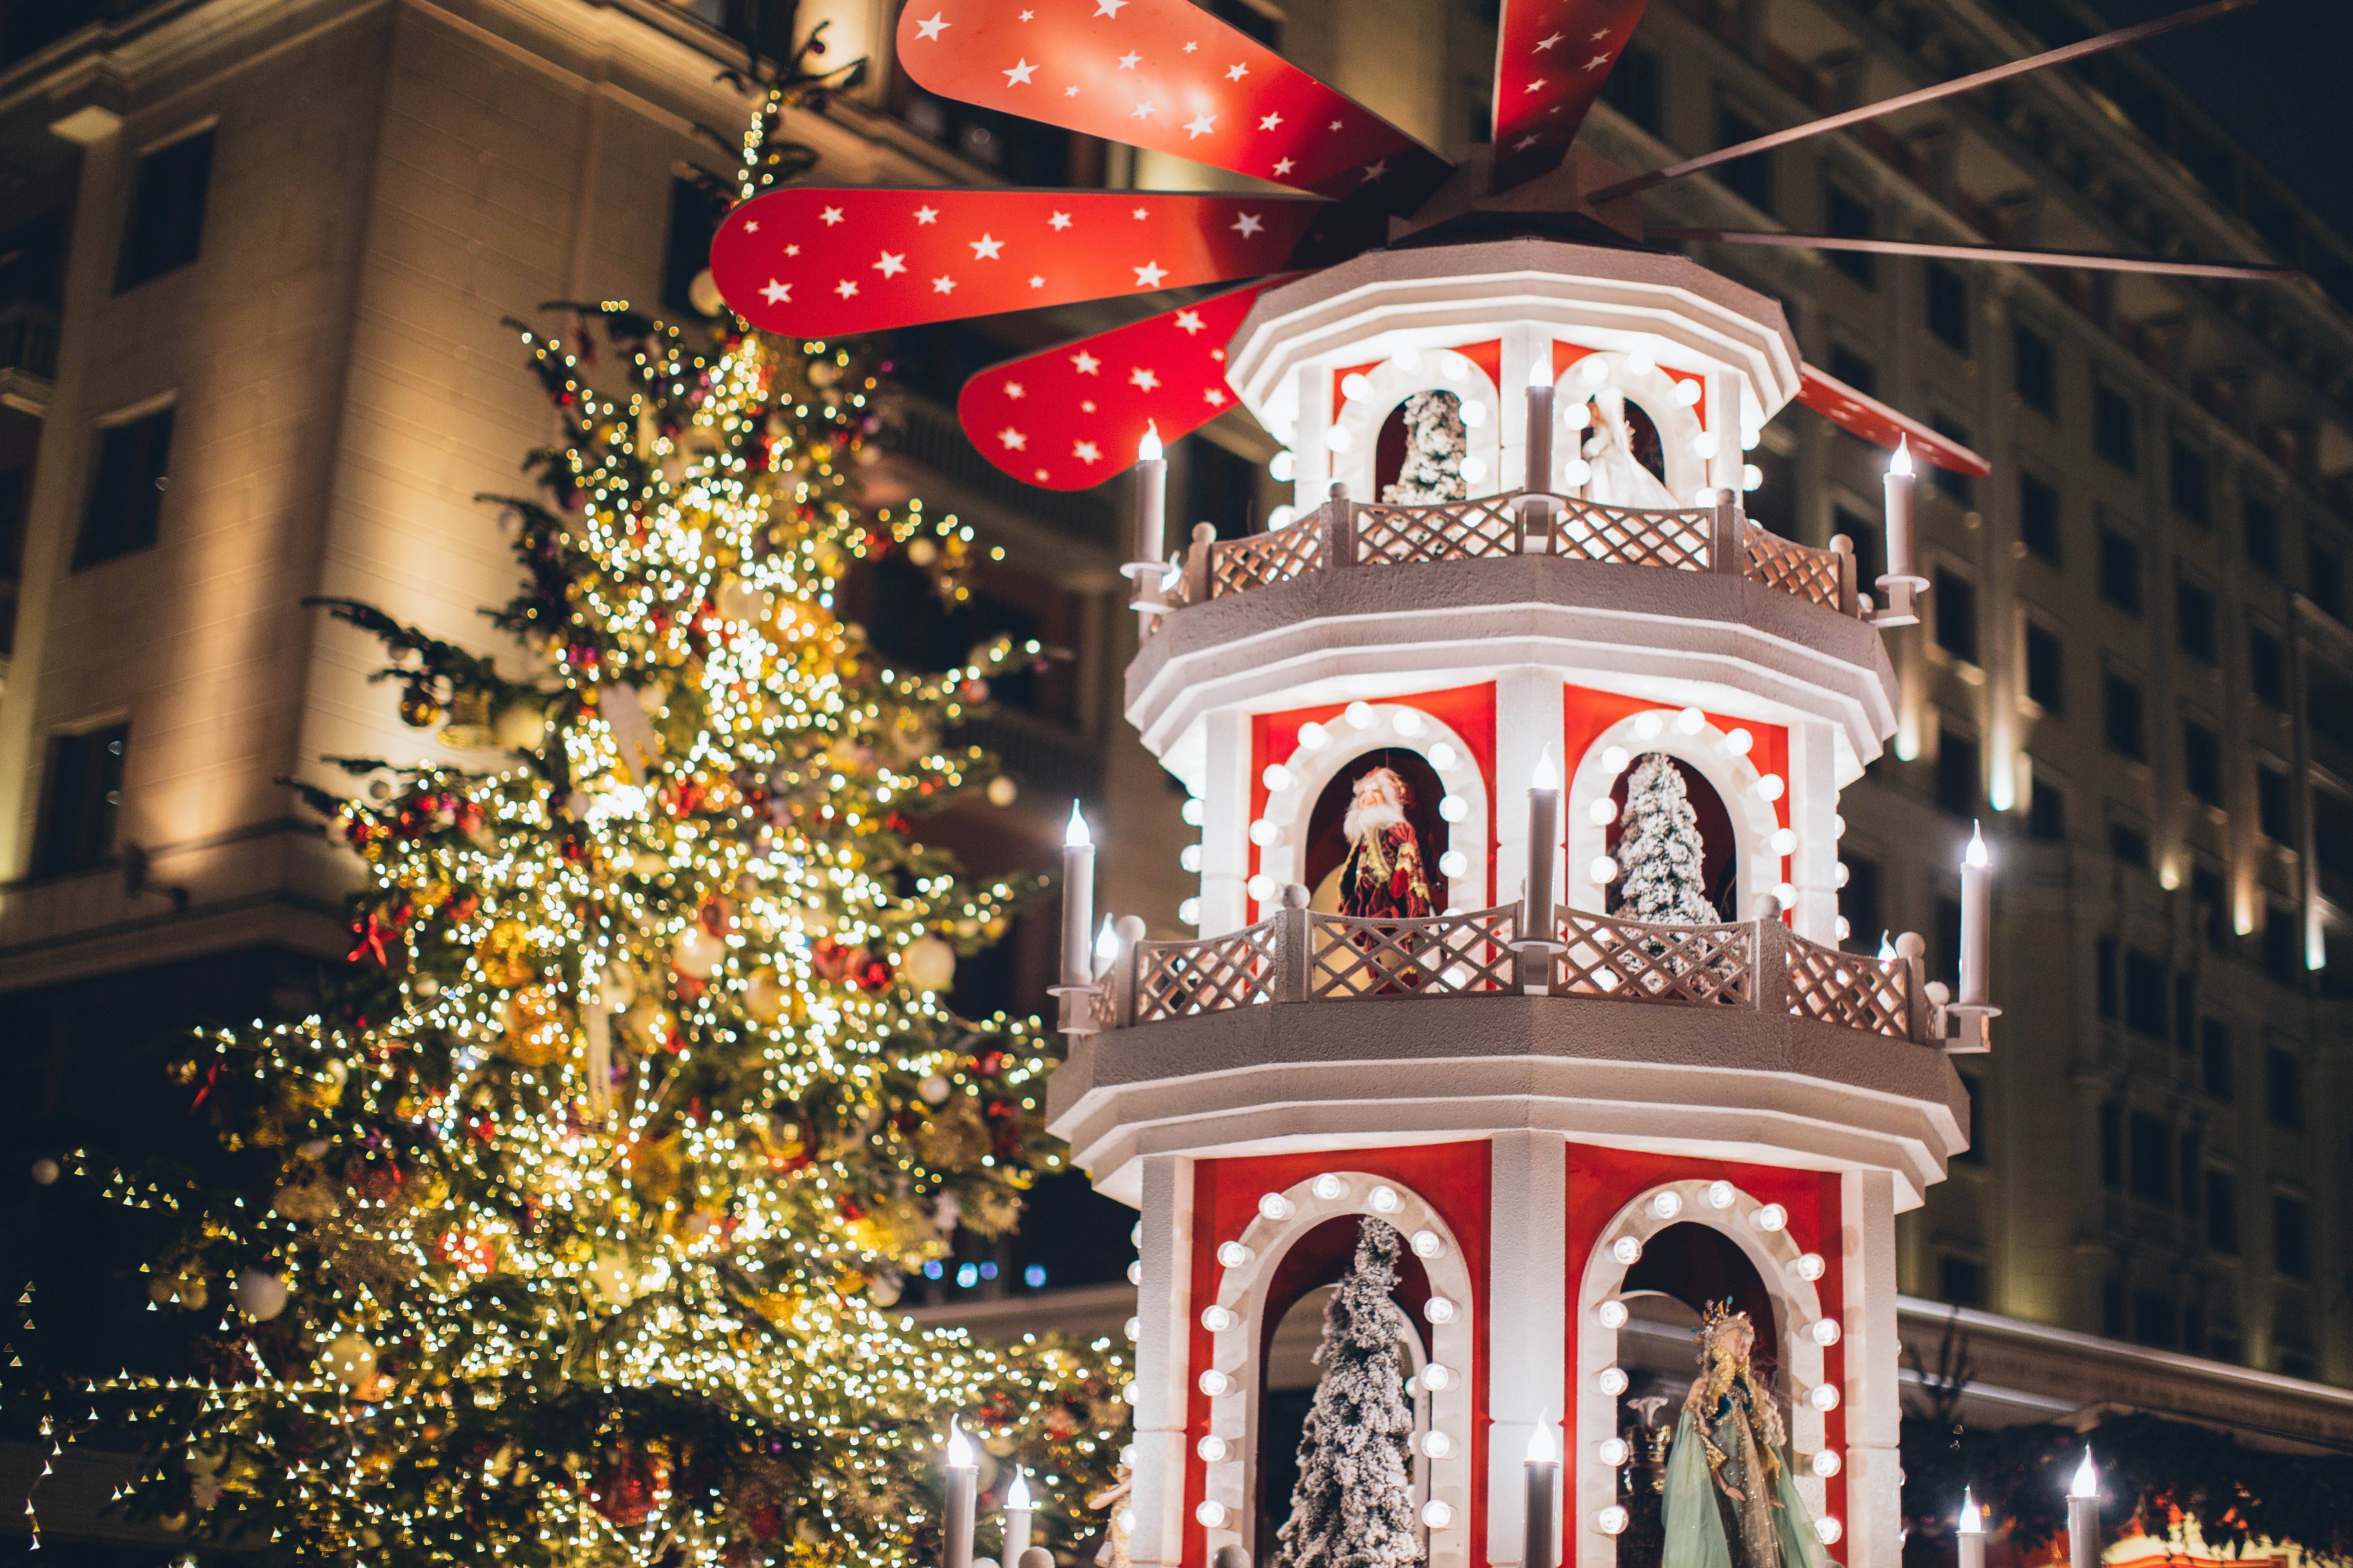 Illuminated Christmas tree and decoration in night city · Free